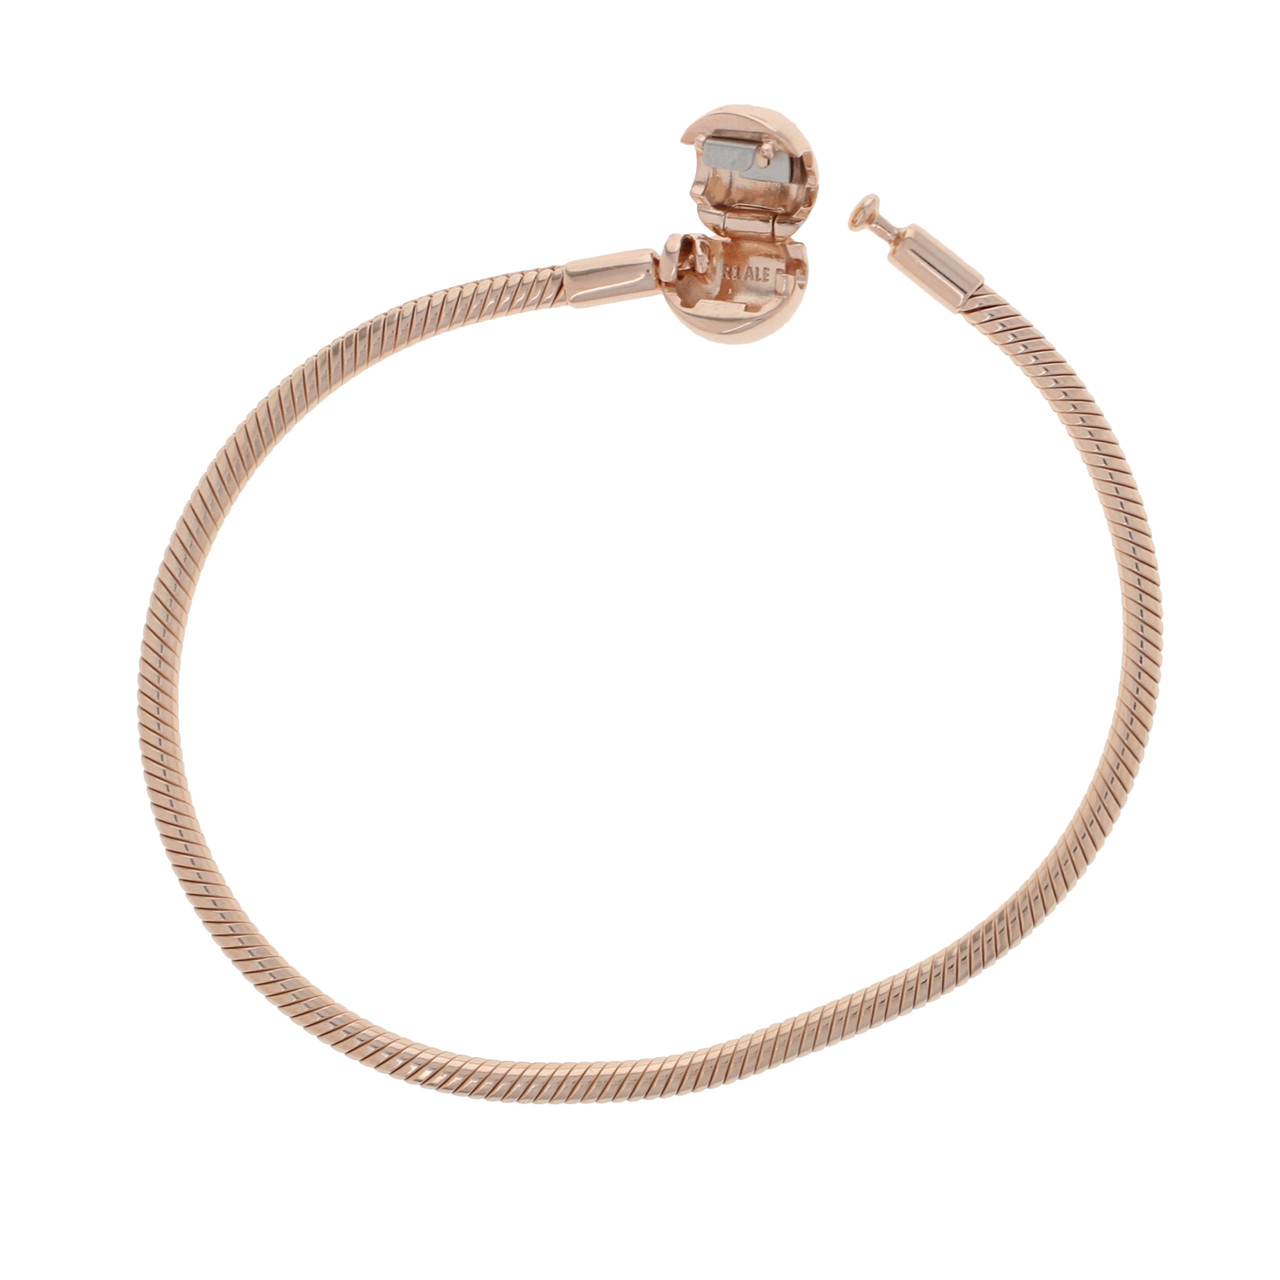 Pandora Women's Rose Clasp Bracelet